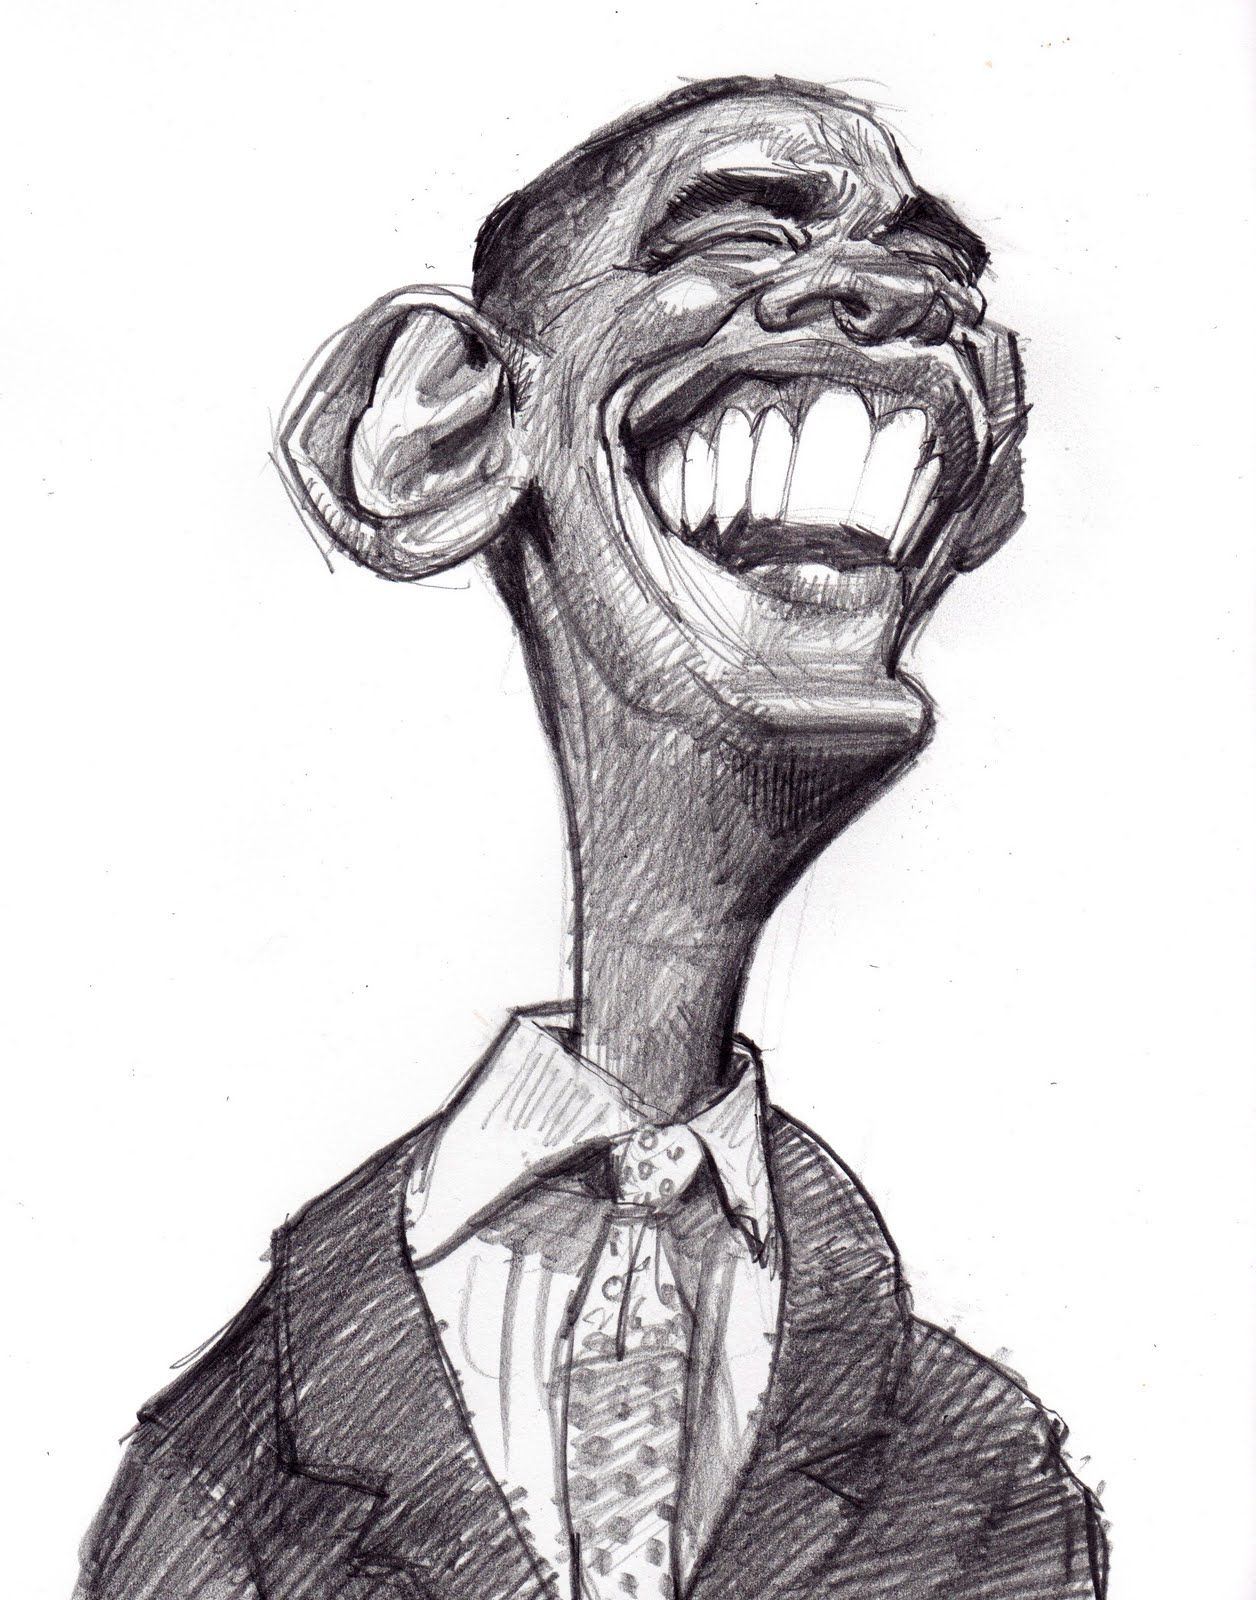 Сатирические шаржи человека. Сатирический портрет Обама. Сатирический портрет Артура пирожкова. Сатирический портрет Милохина. Сатирические образы человека.